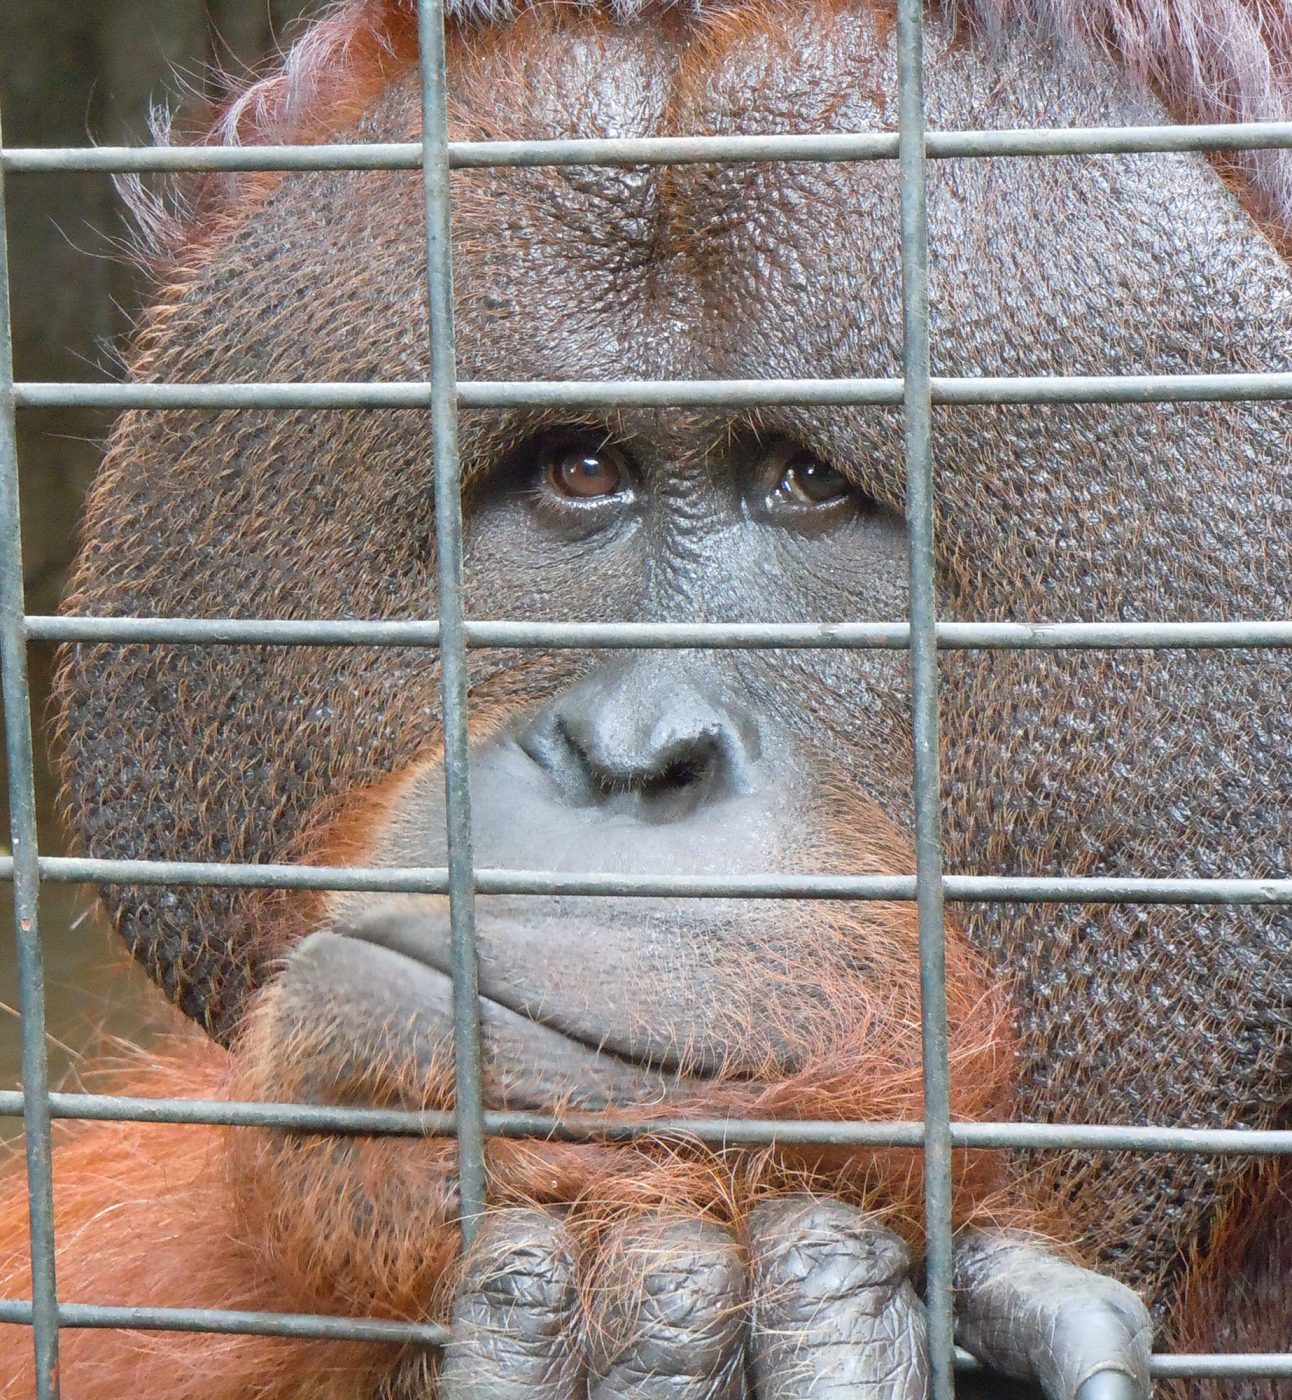 A captive orangutan looks through bars